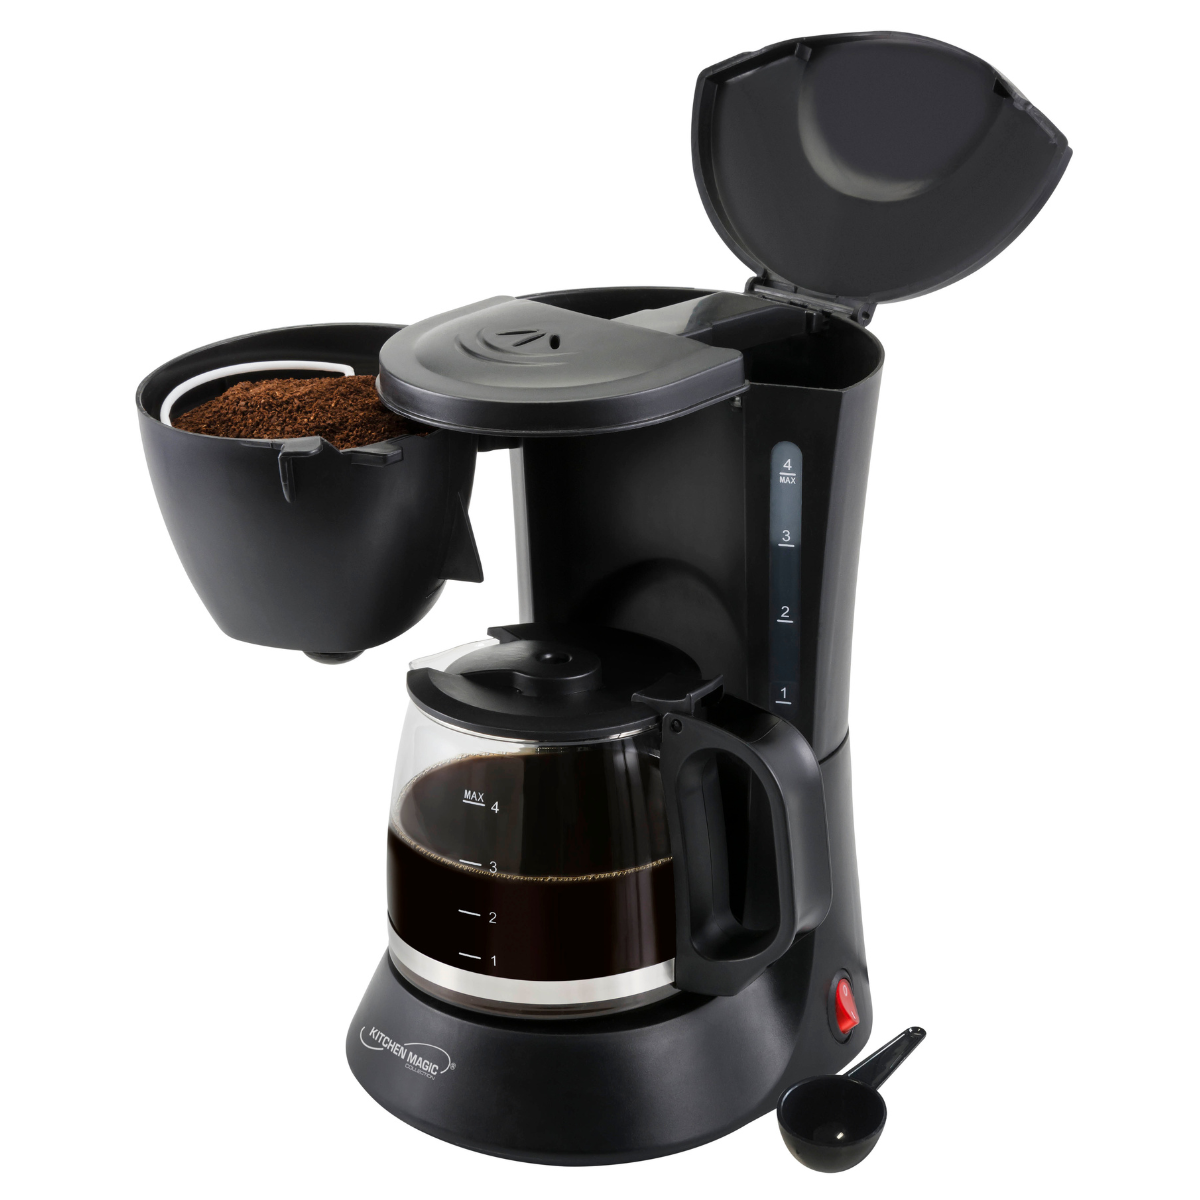 Personal Drip Coffee Maker CKM-204 N